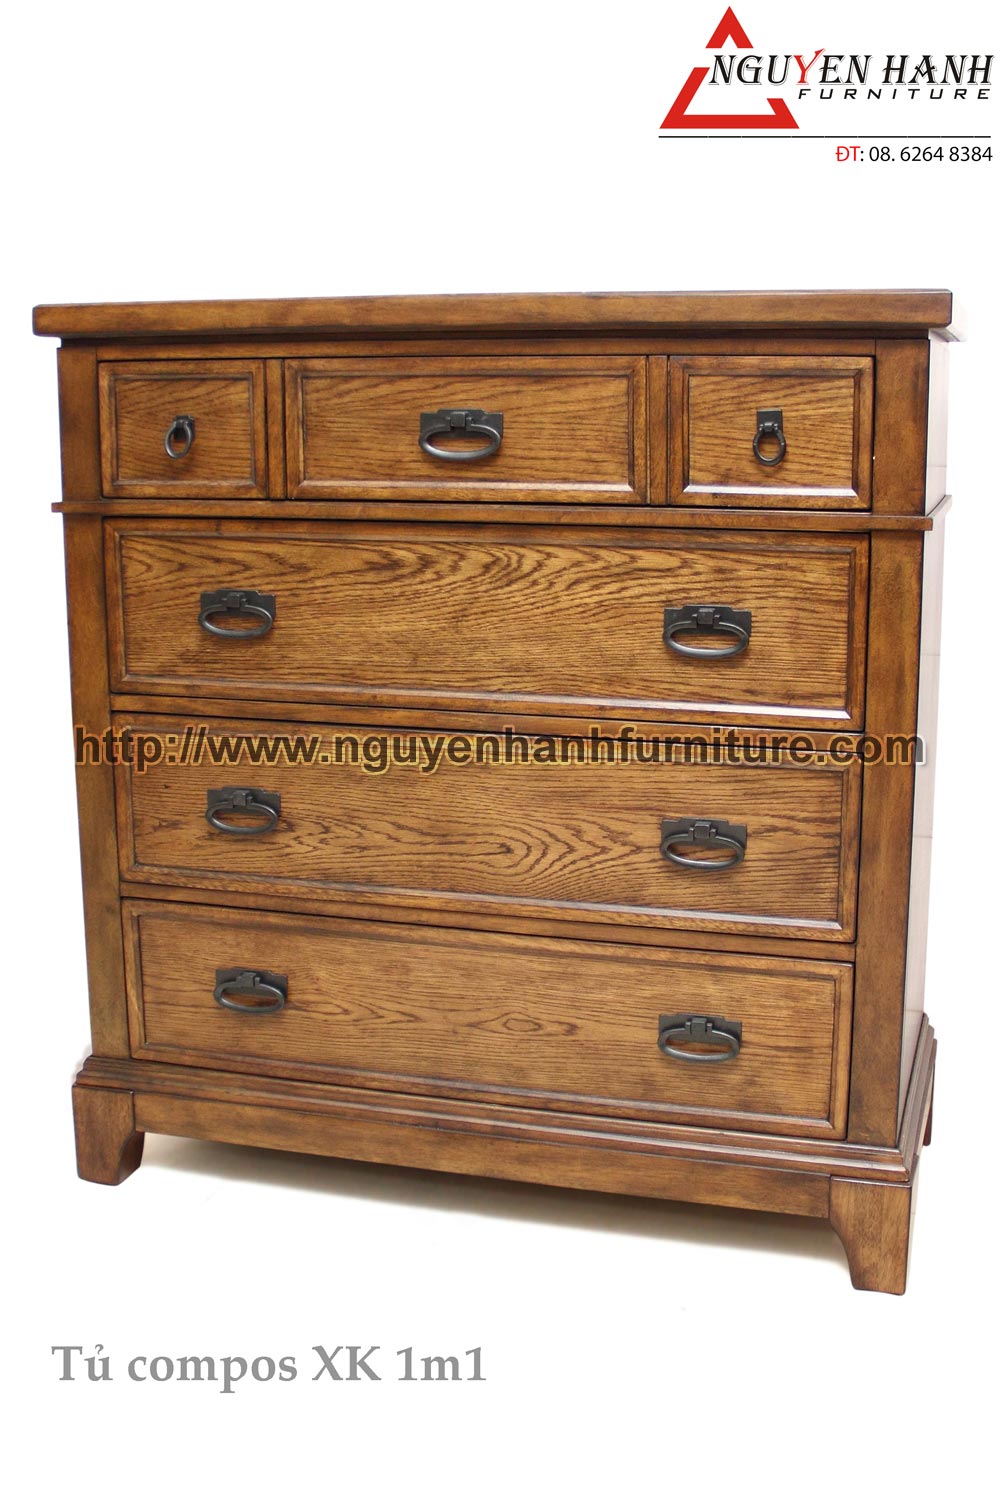 Name product: 1m1 Export-standard compos Drawers Cabinet- Dimensions: 46 x 100 x 110cm (H) - Description: Oak wood, Rubber wood